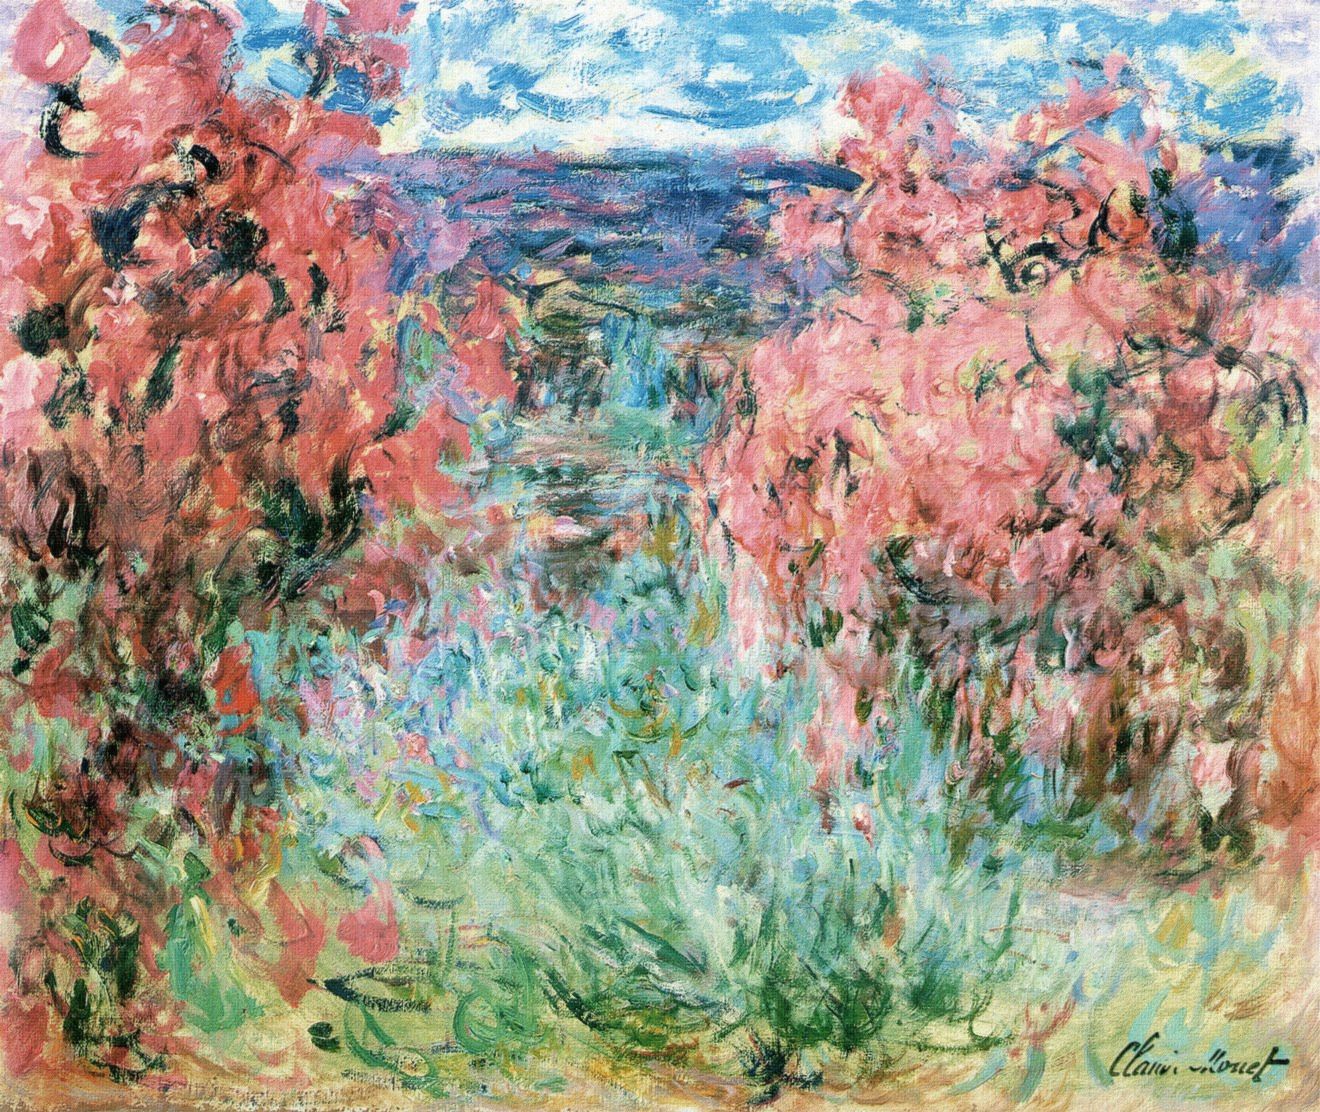 Claude+Monet-1840-1926 (361).jpg